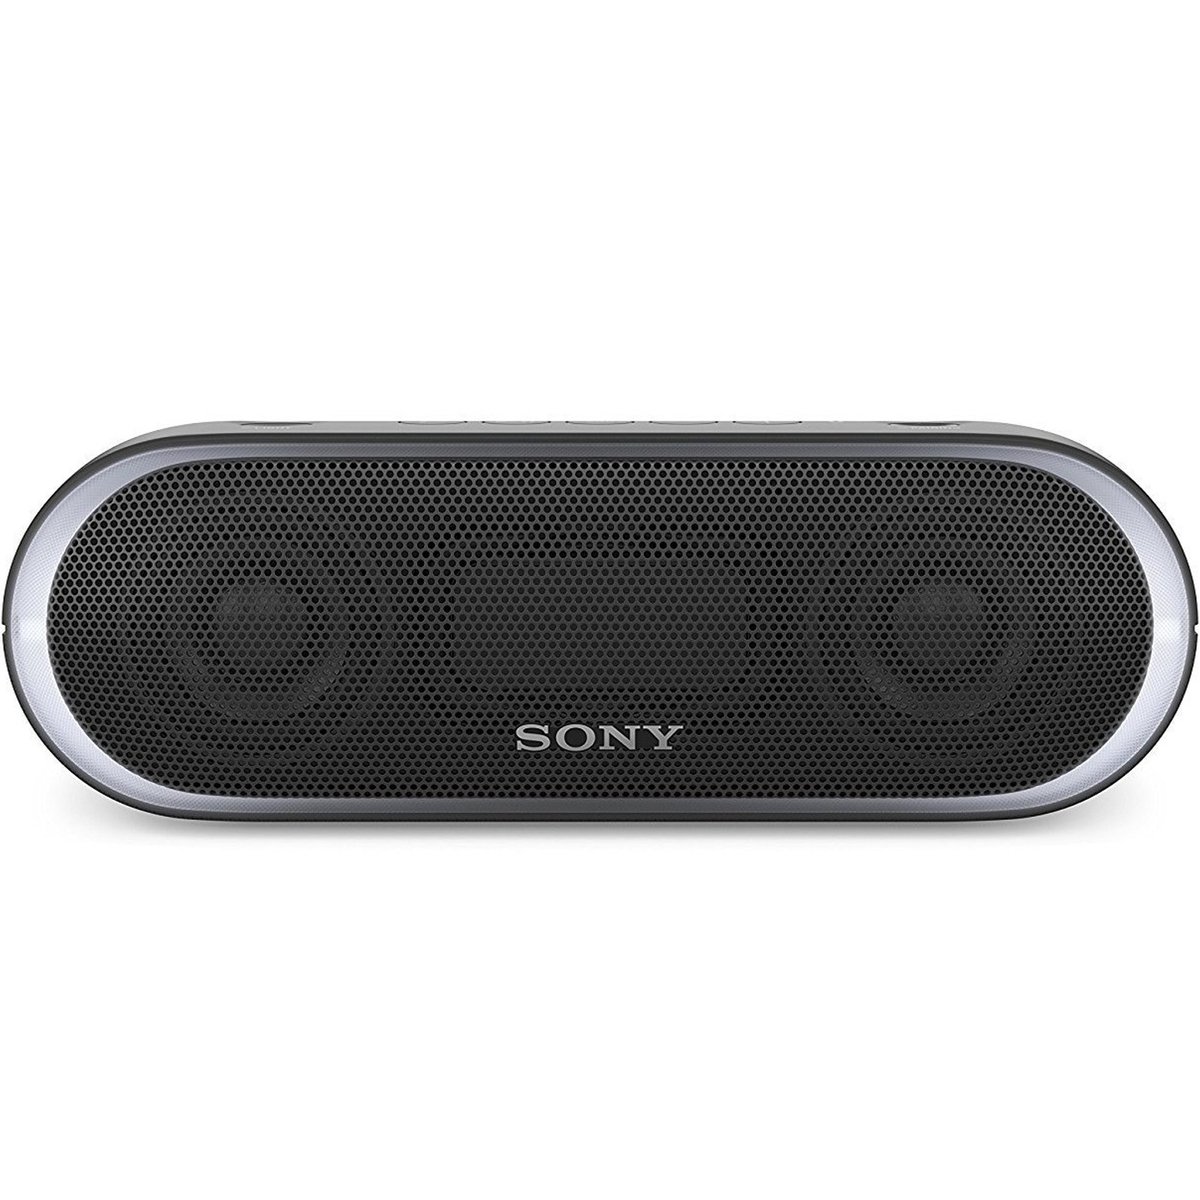 Sony Portable Wireless Bluetooth Speaker SRS-XB20 Black